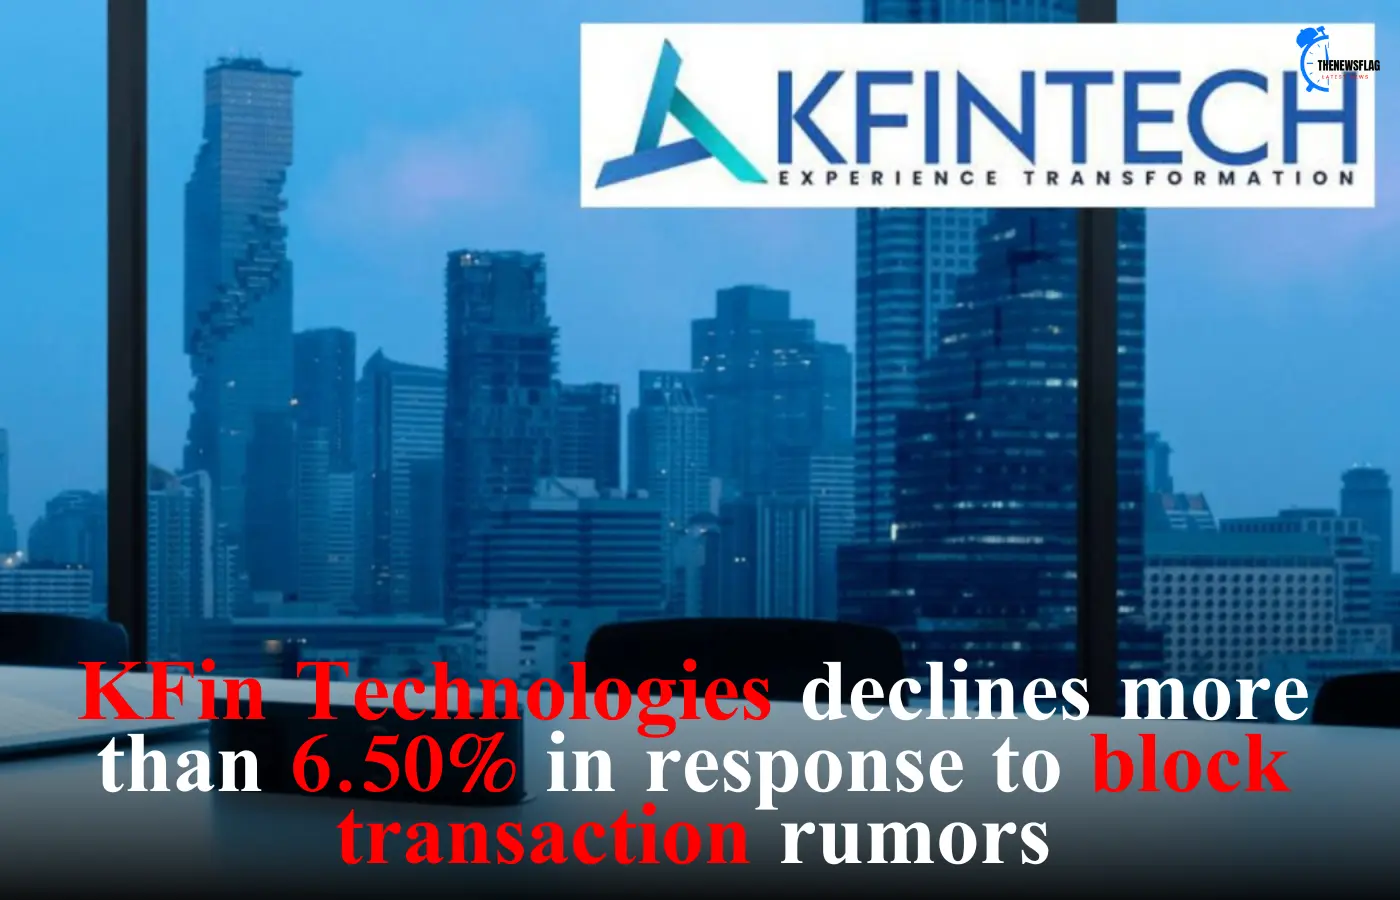 KFin Technologies declines more than 6.50% in response to block transaction rumors